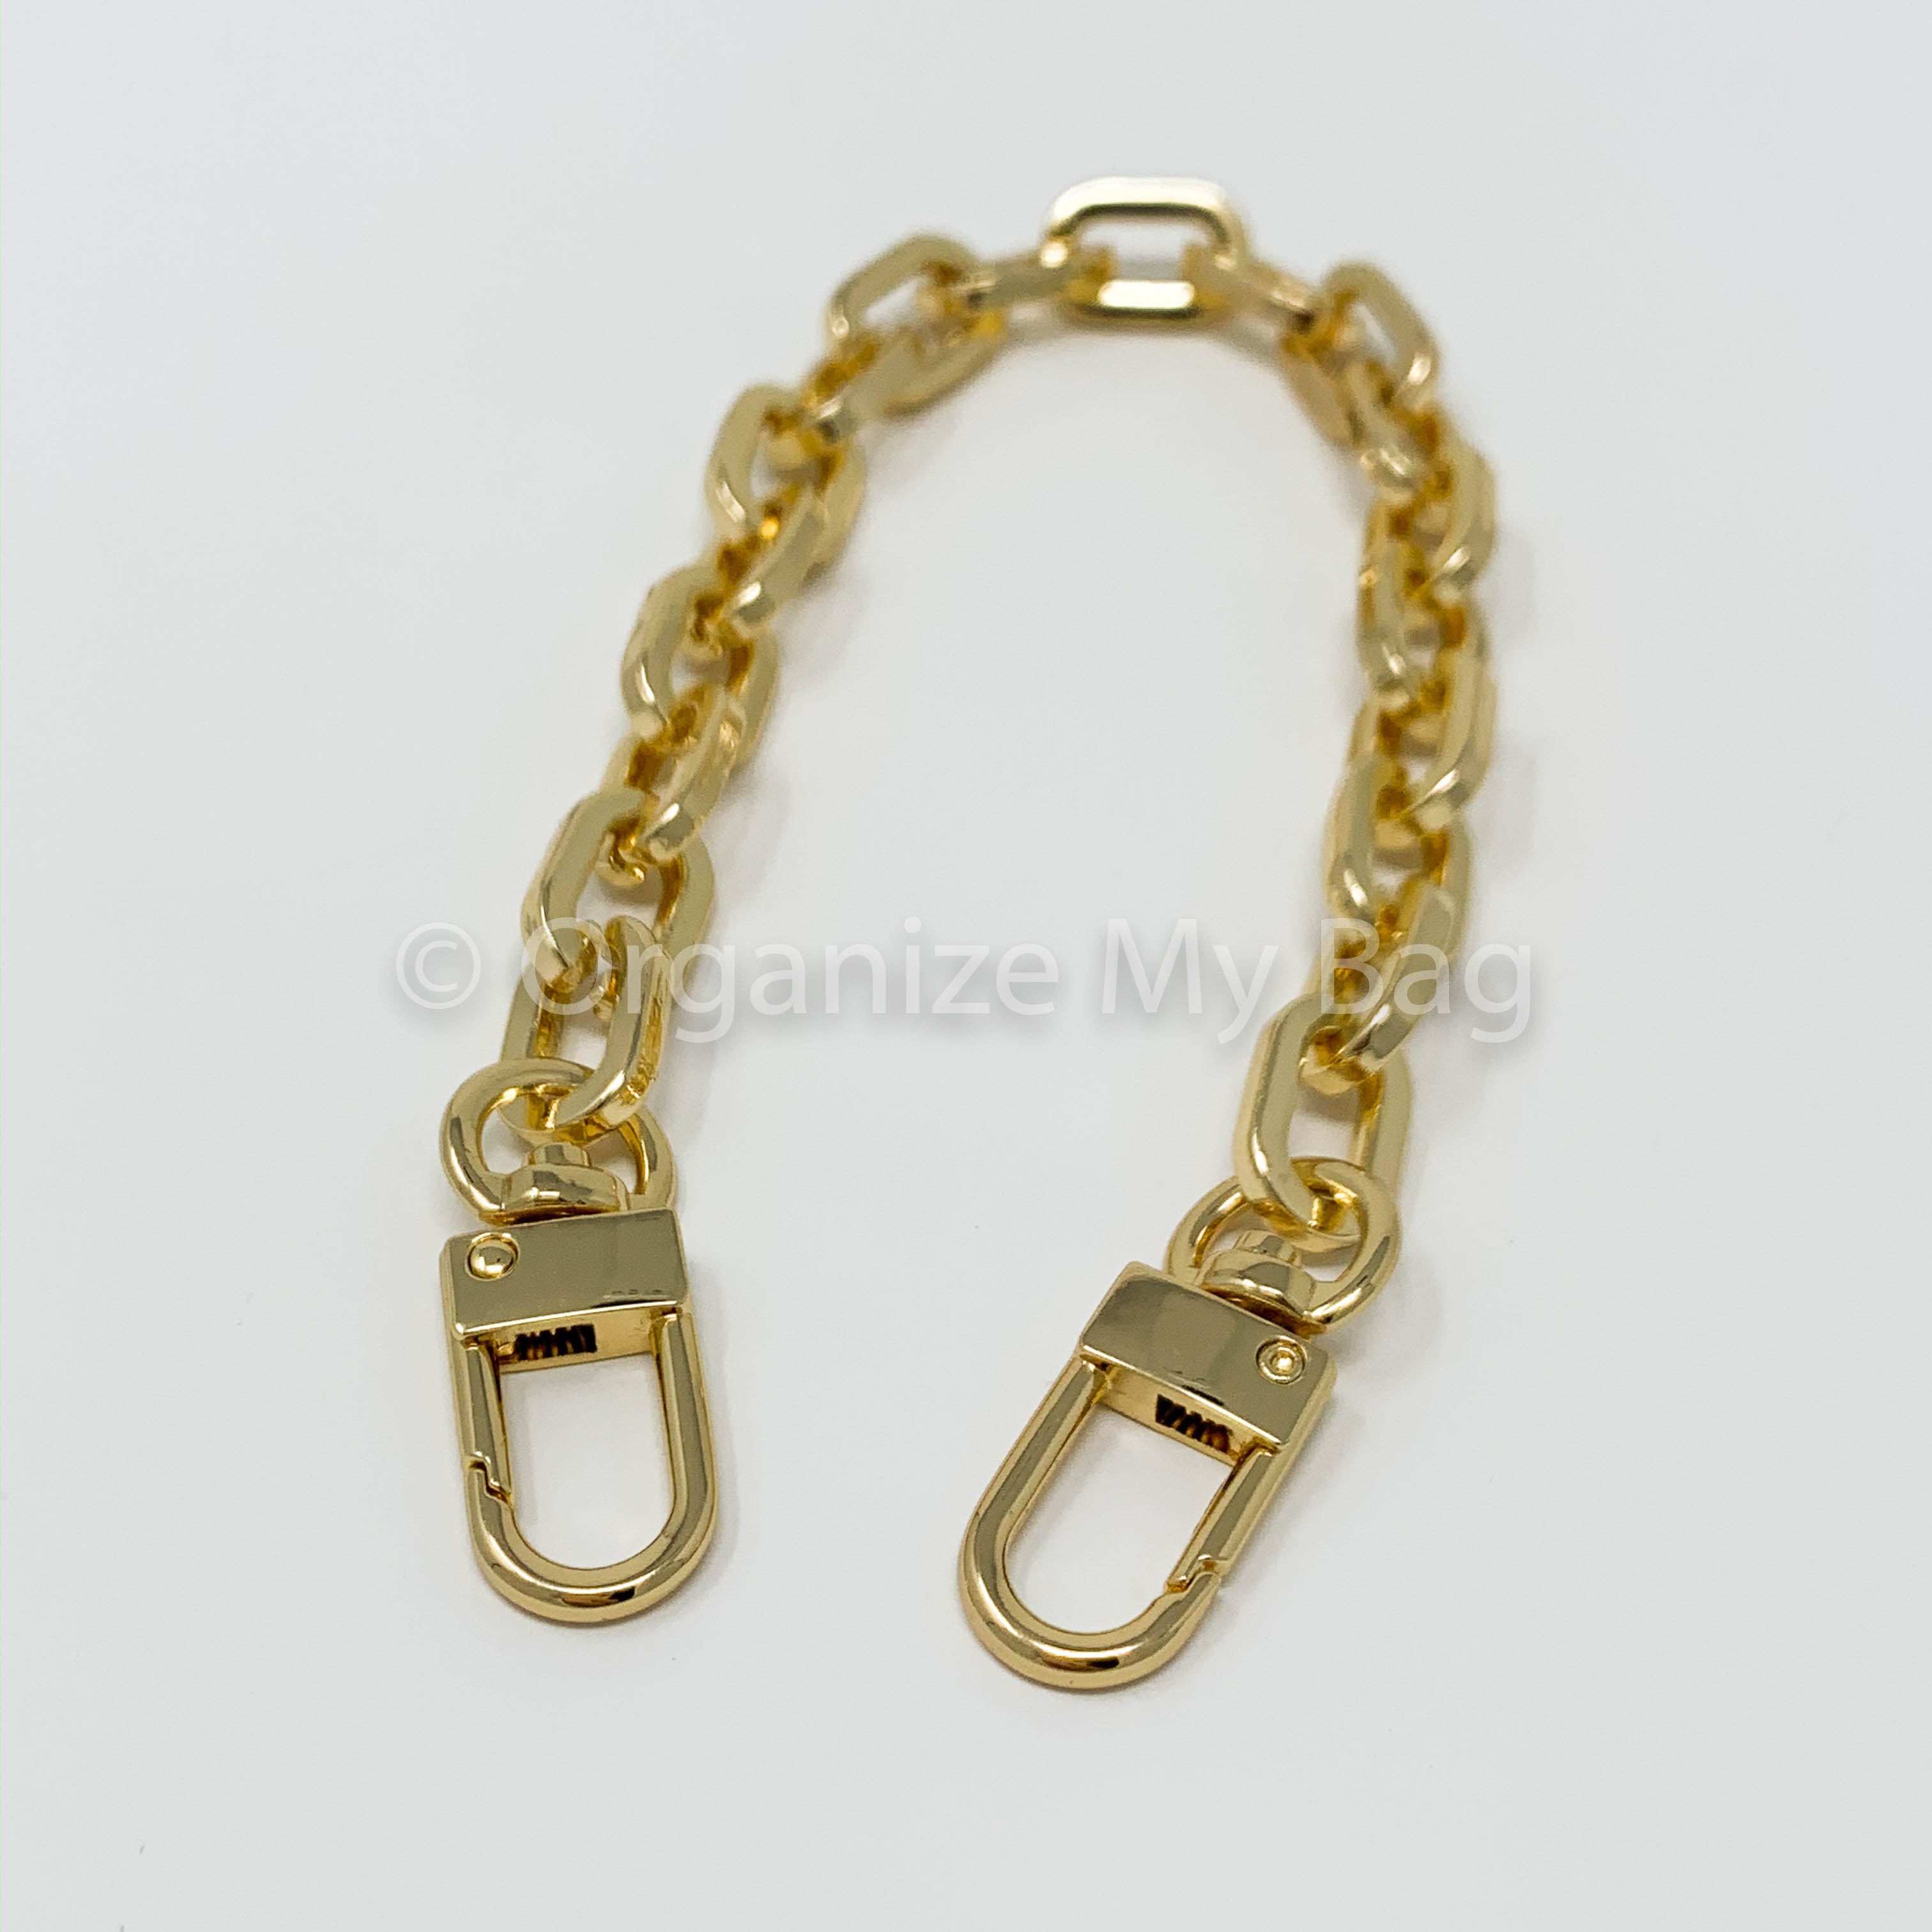 Cles - Chenne - Chain - Charm - Gold - Vuitton - Ano - Key